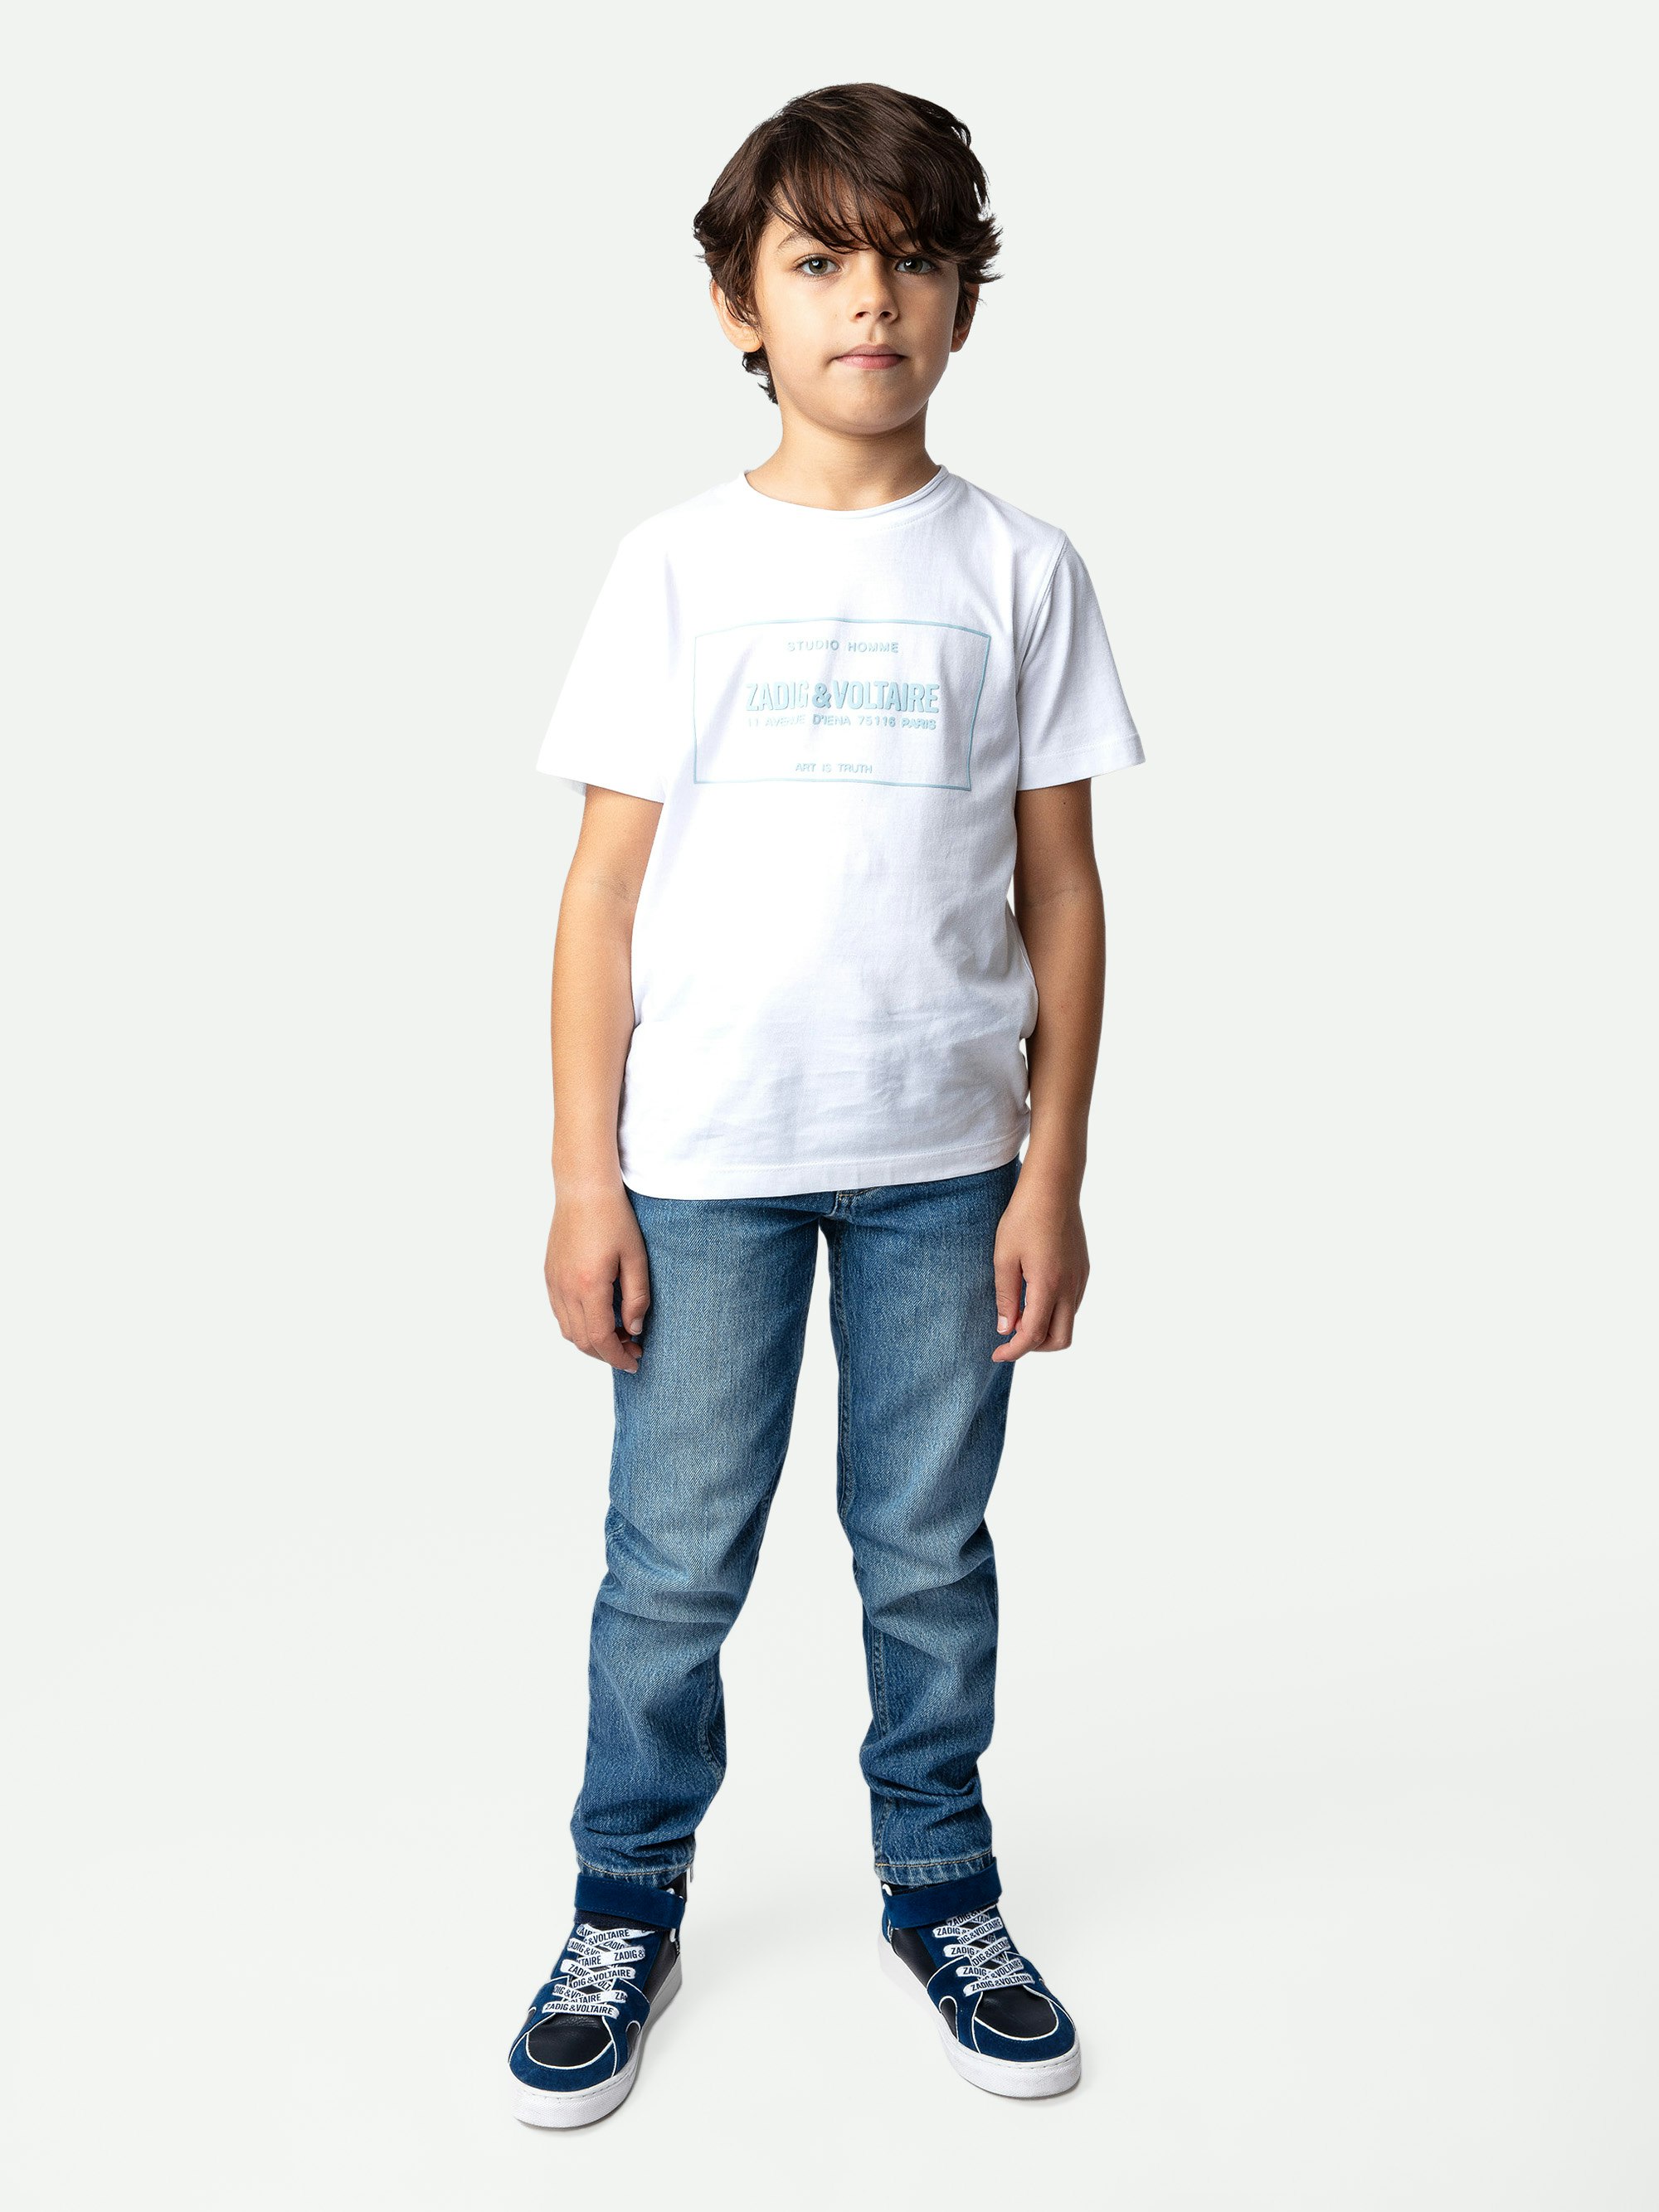 Jungen-T-Shirt Toby - Weißes Jungen-T-Shirt mit kurzen Ärmeln aus Jersey-Baumwolle mit Wappen-Label.